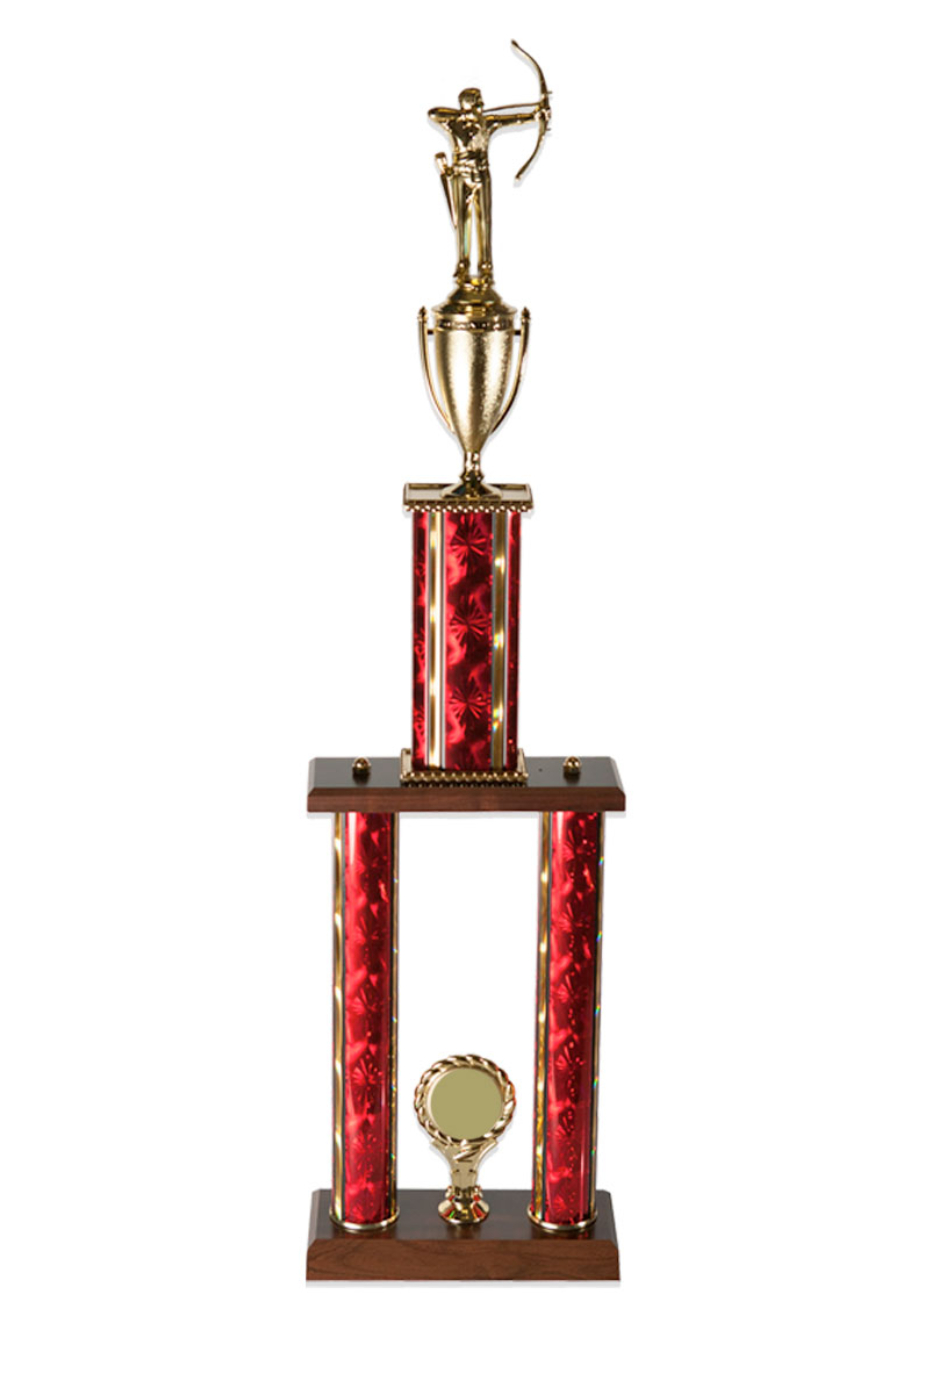 NASP® 2 Post Trophy